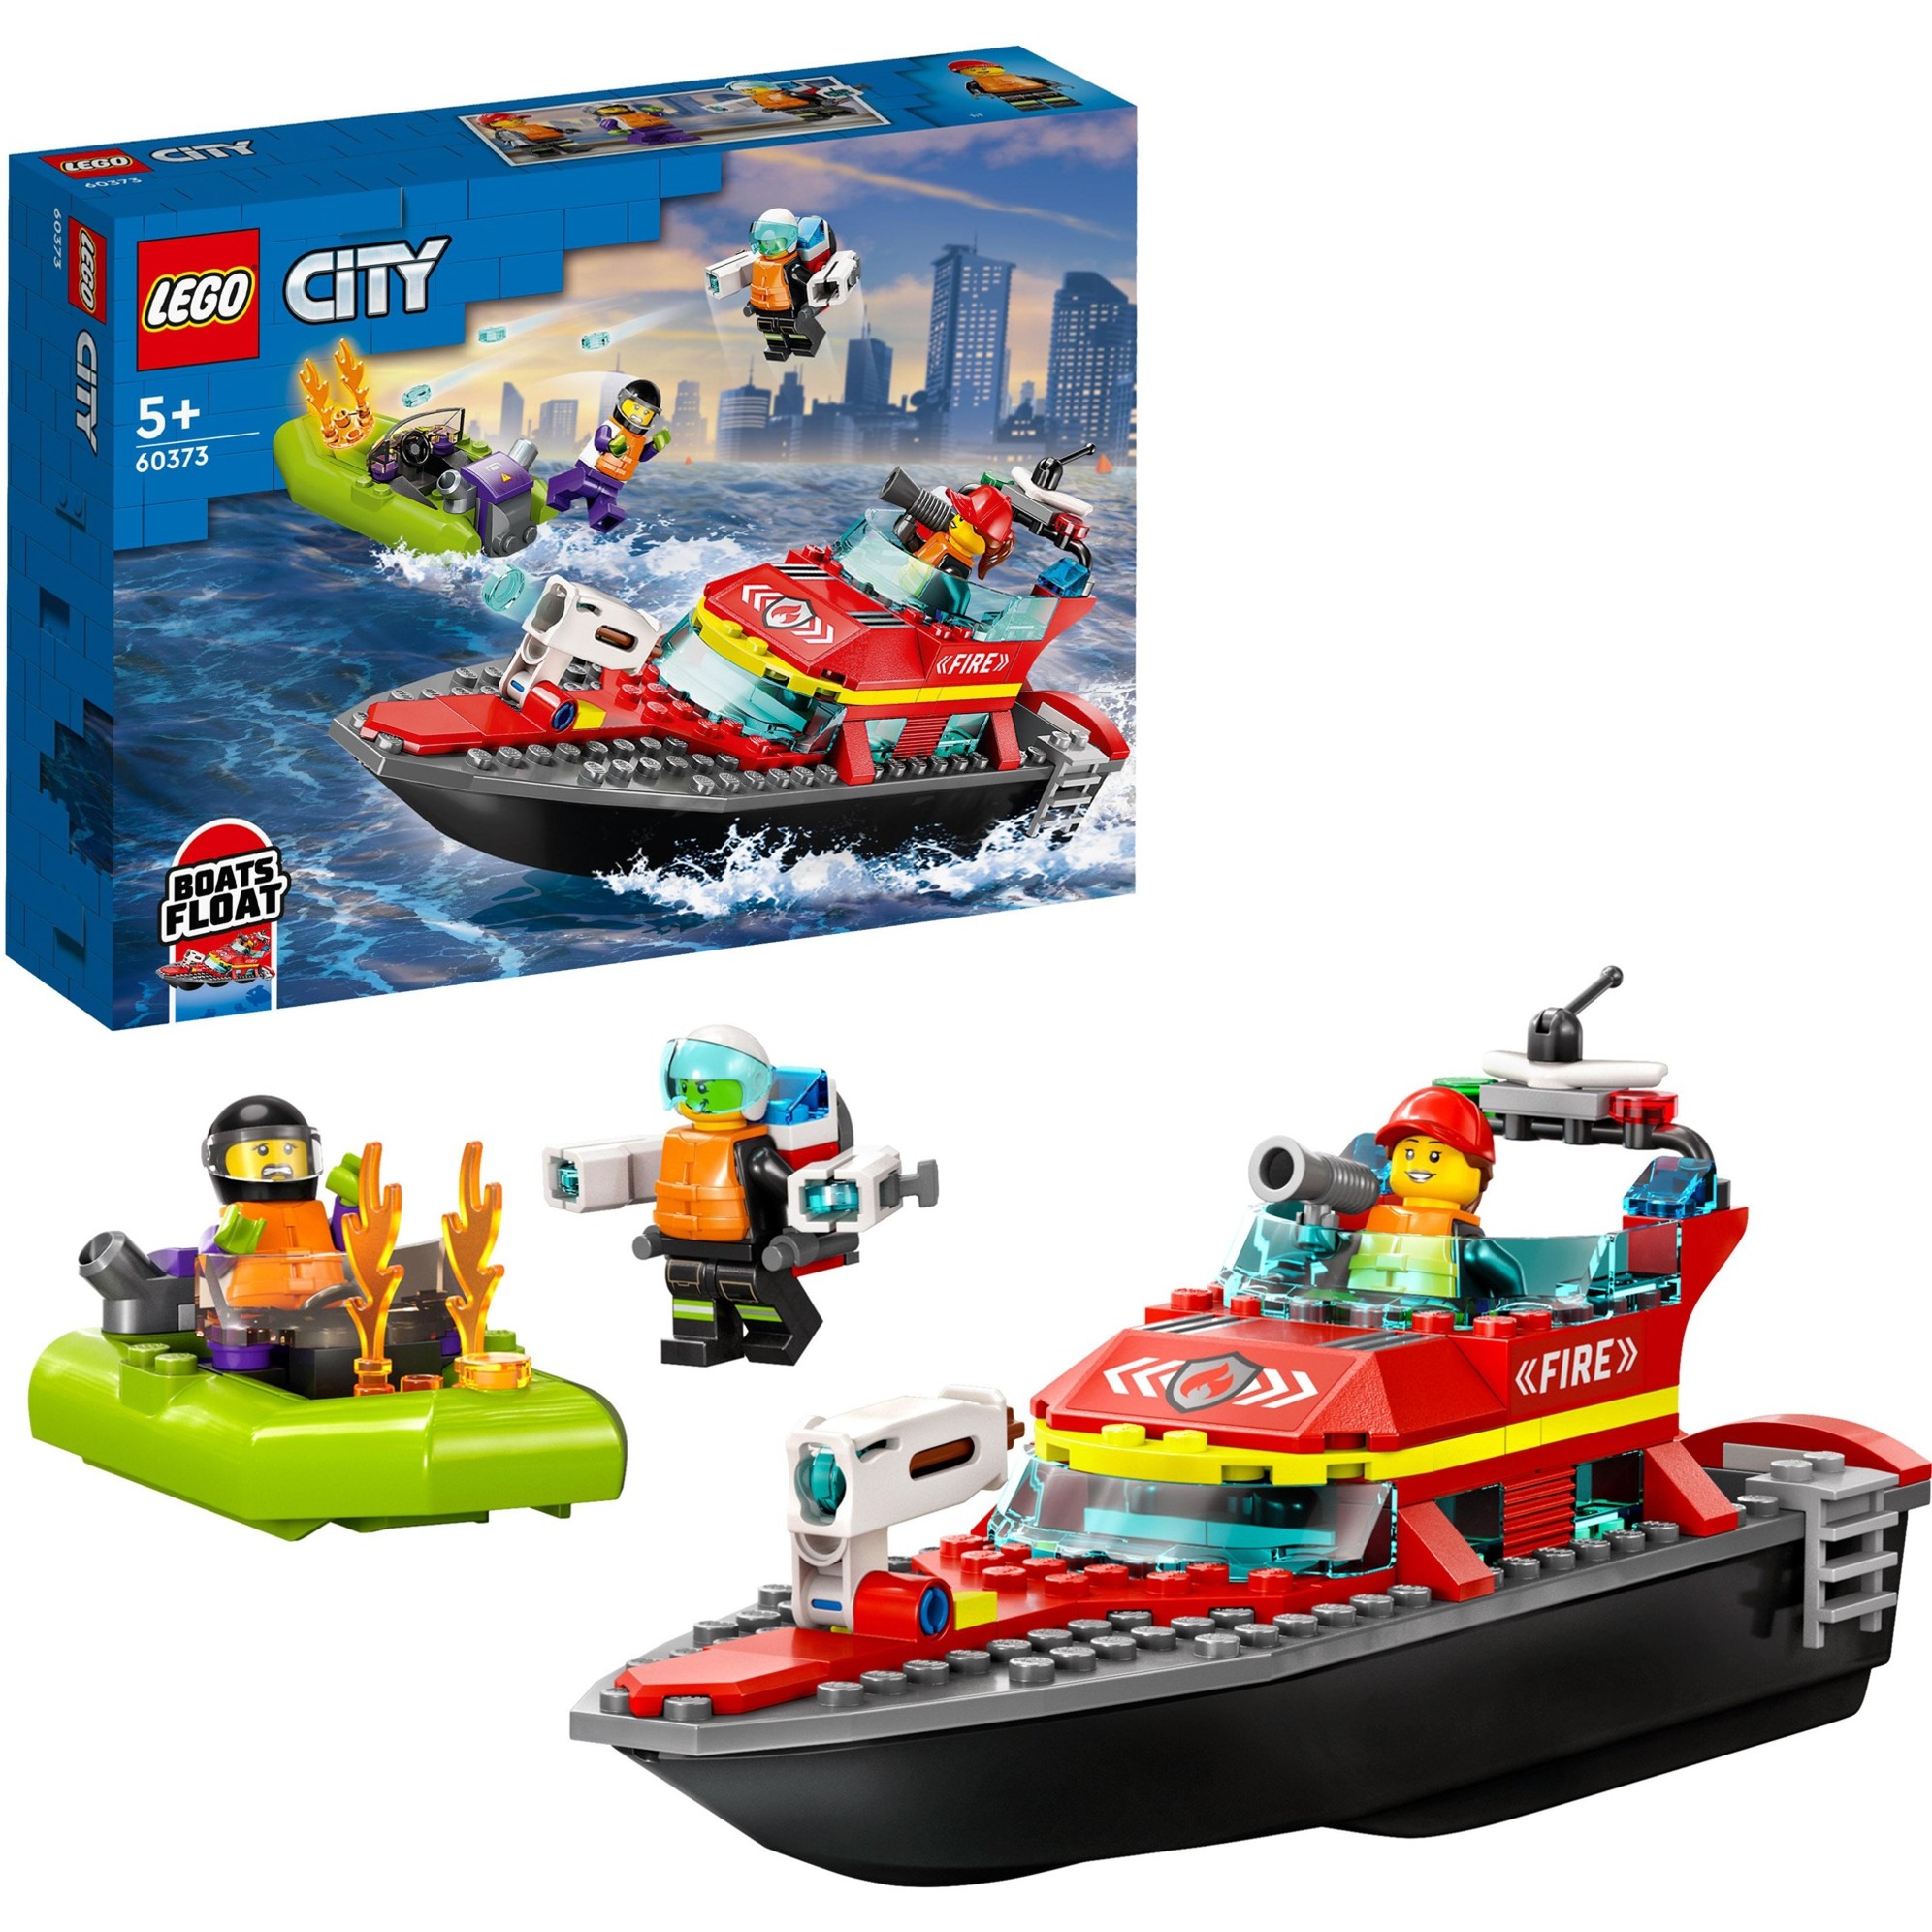 60373 City Feuerwehrboot, Konstruktionsspielzeug